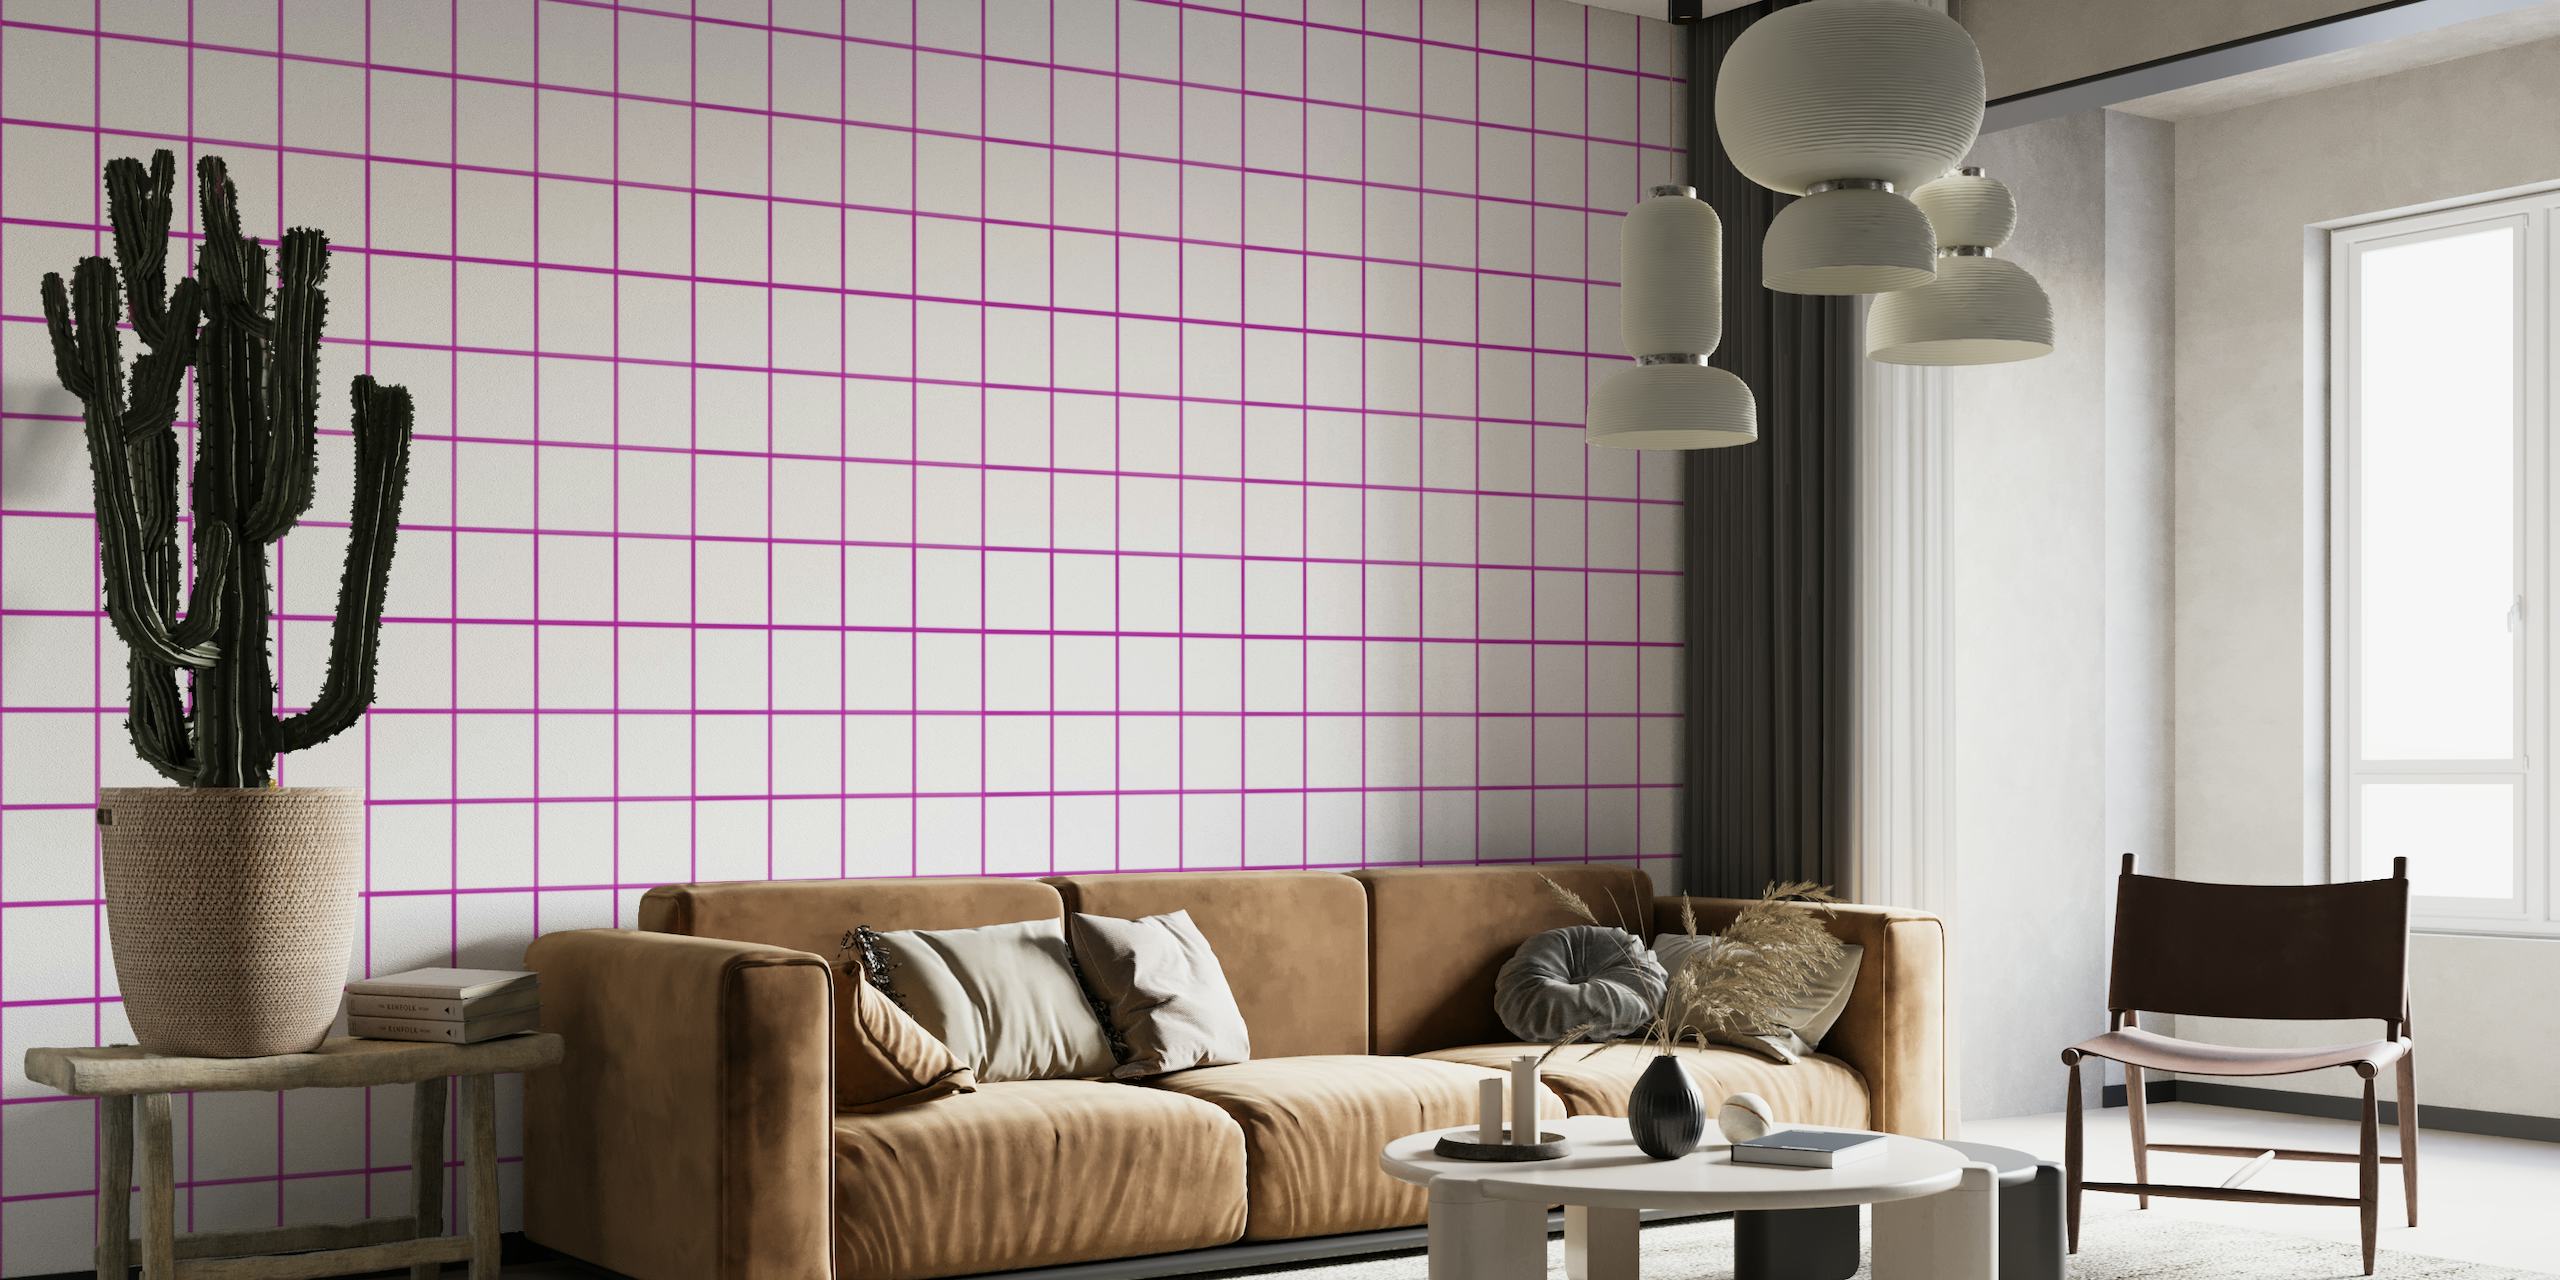 Purple grouted tiles papel pintado